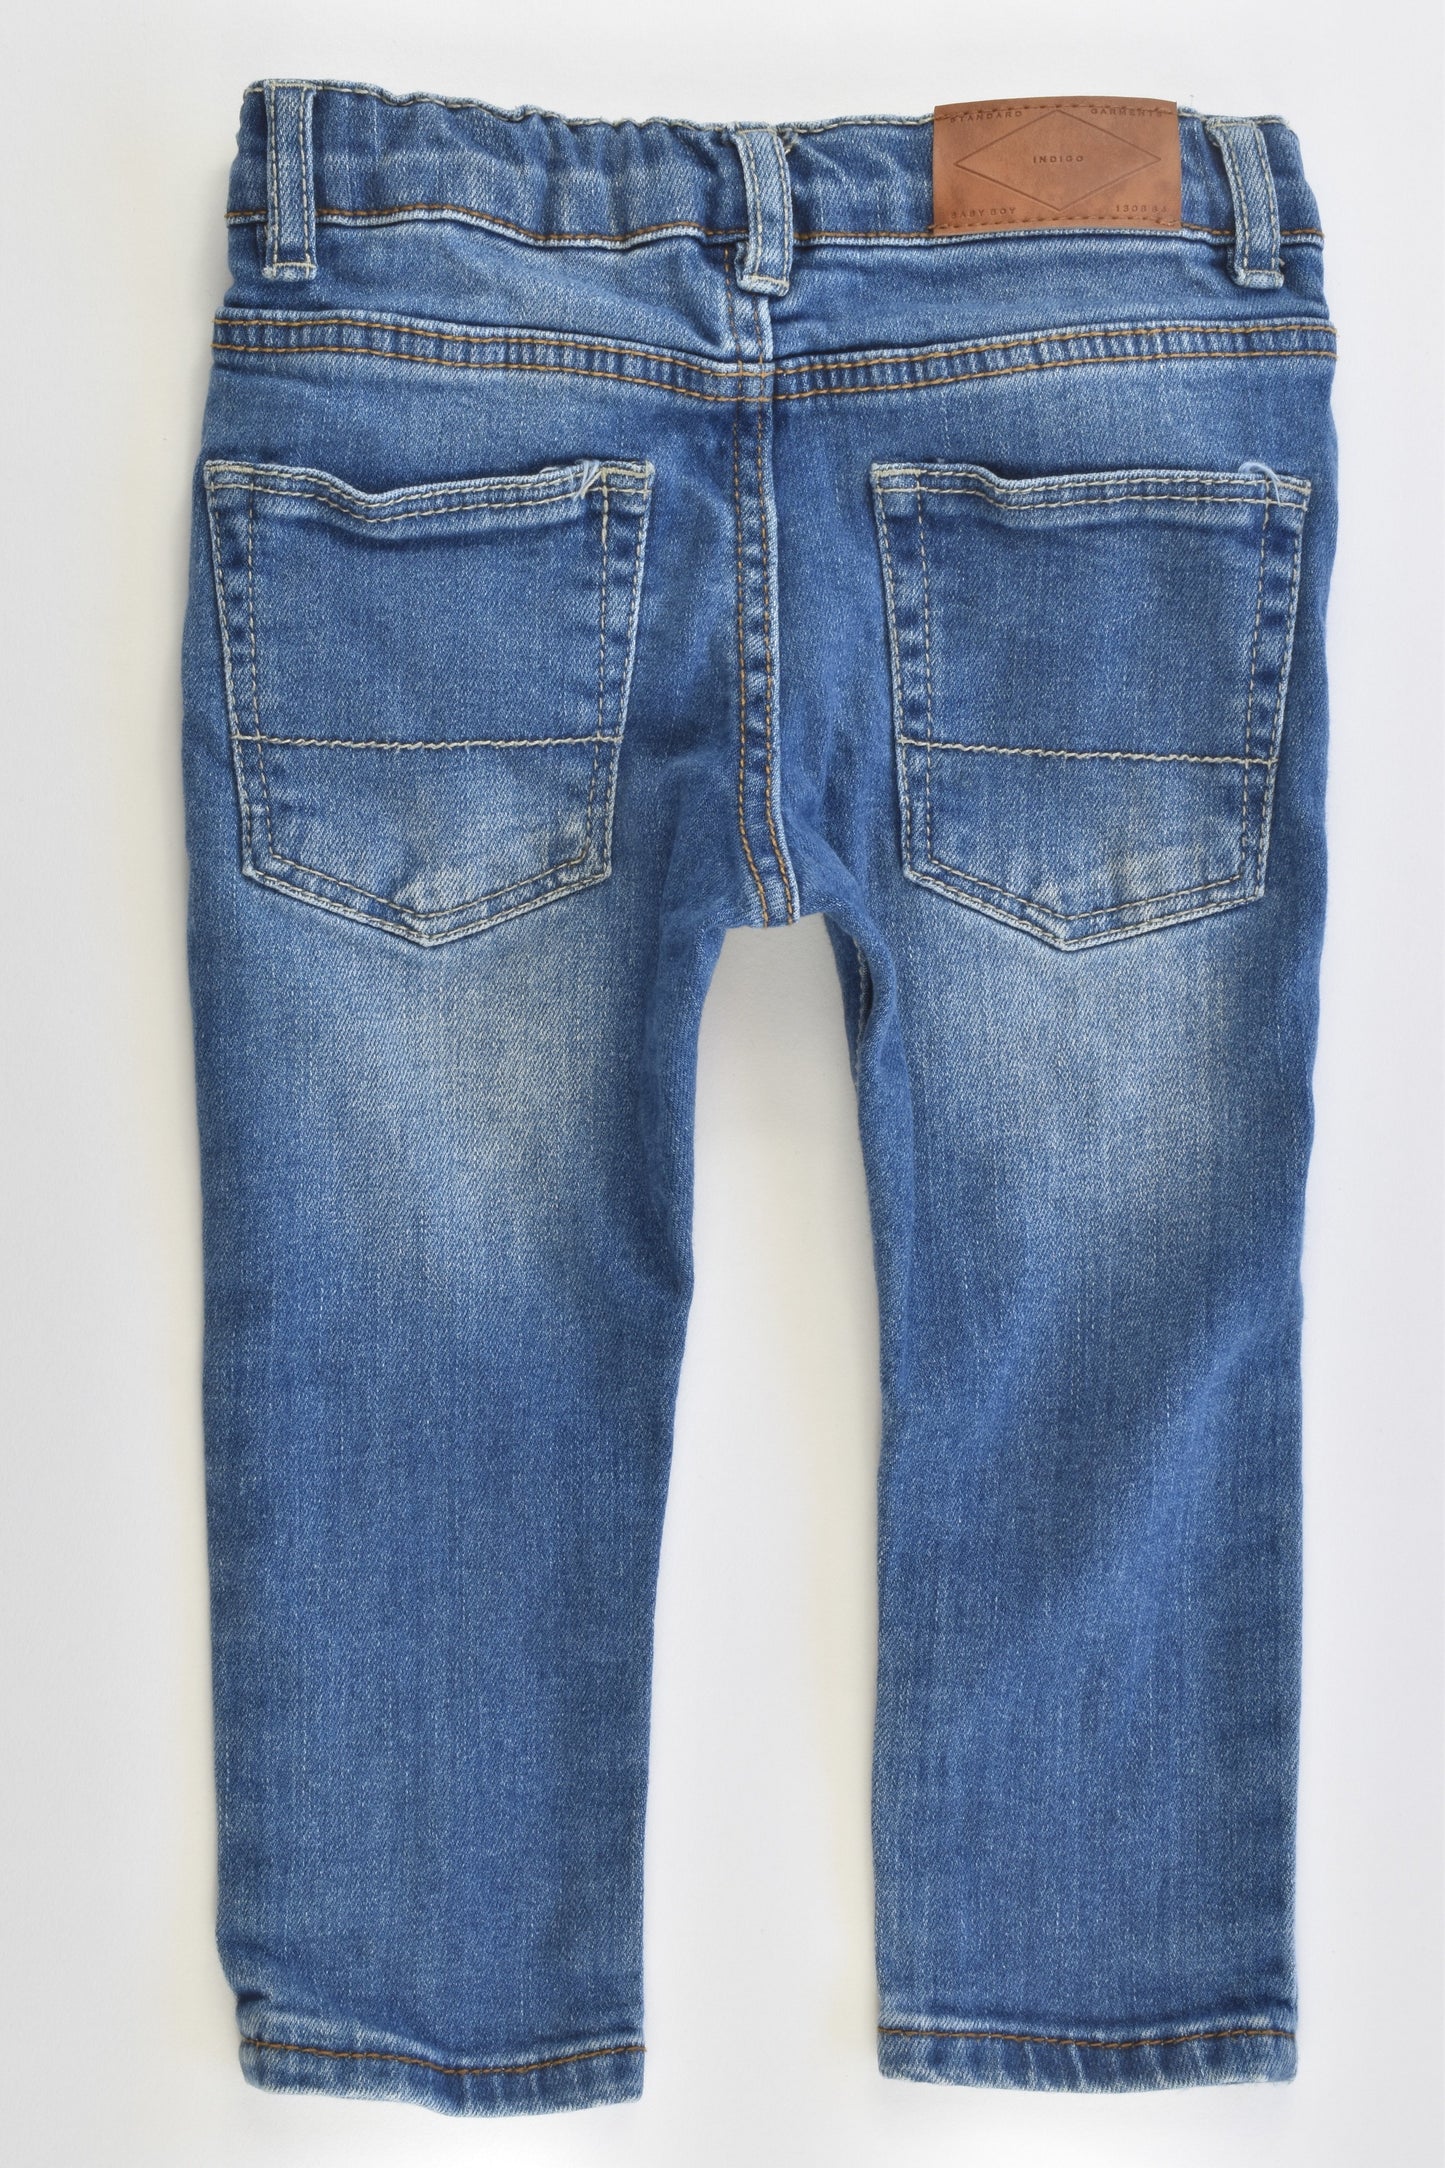 Zara Size 1 /12/18 months, 86 cm) Soft and Stretchy Denim Pants